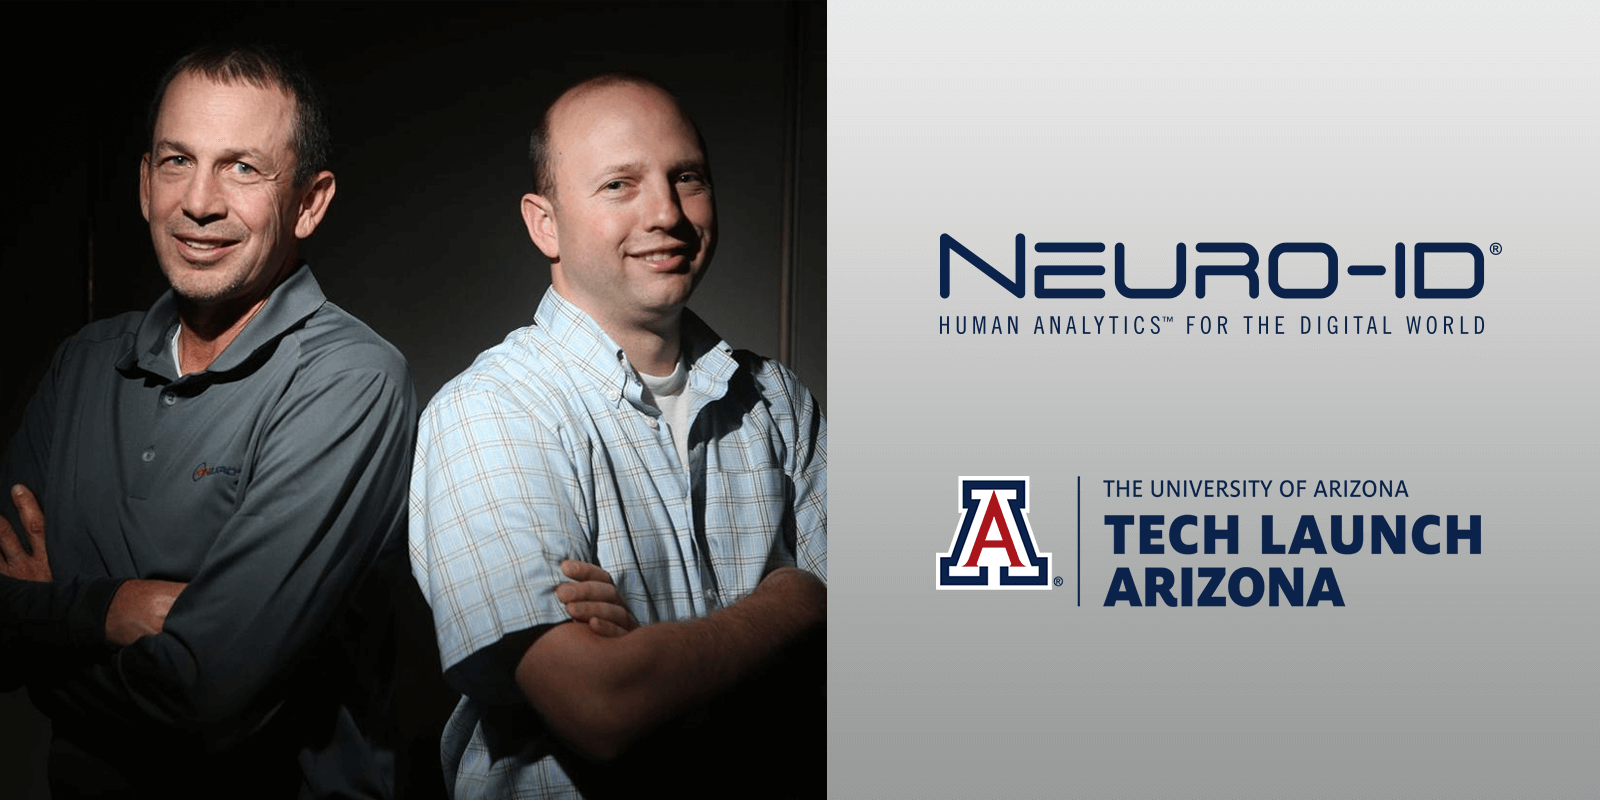 Neuro-ID’s formative partnership with Tech Launch Arizona